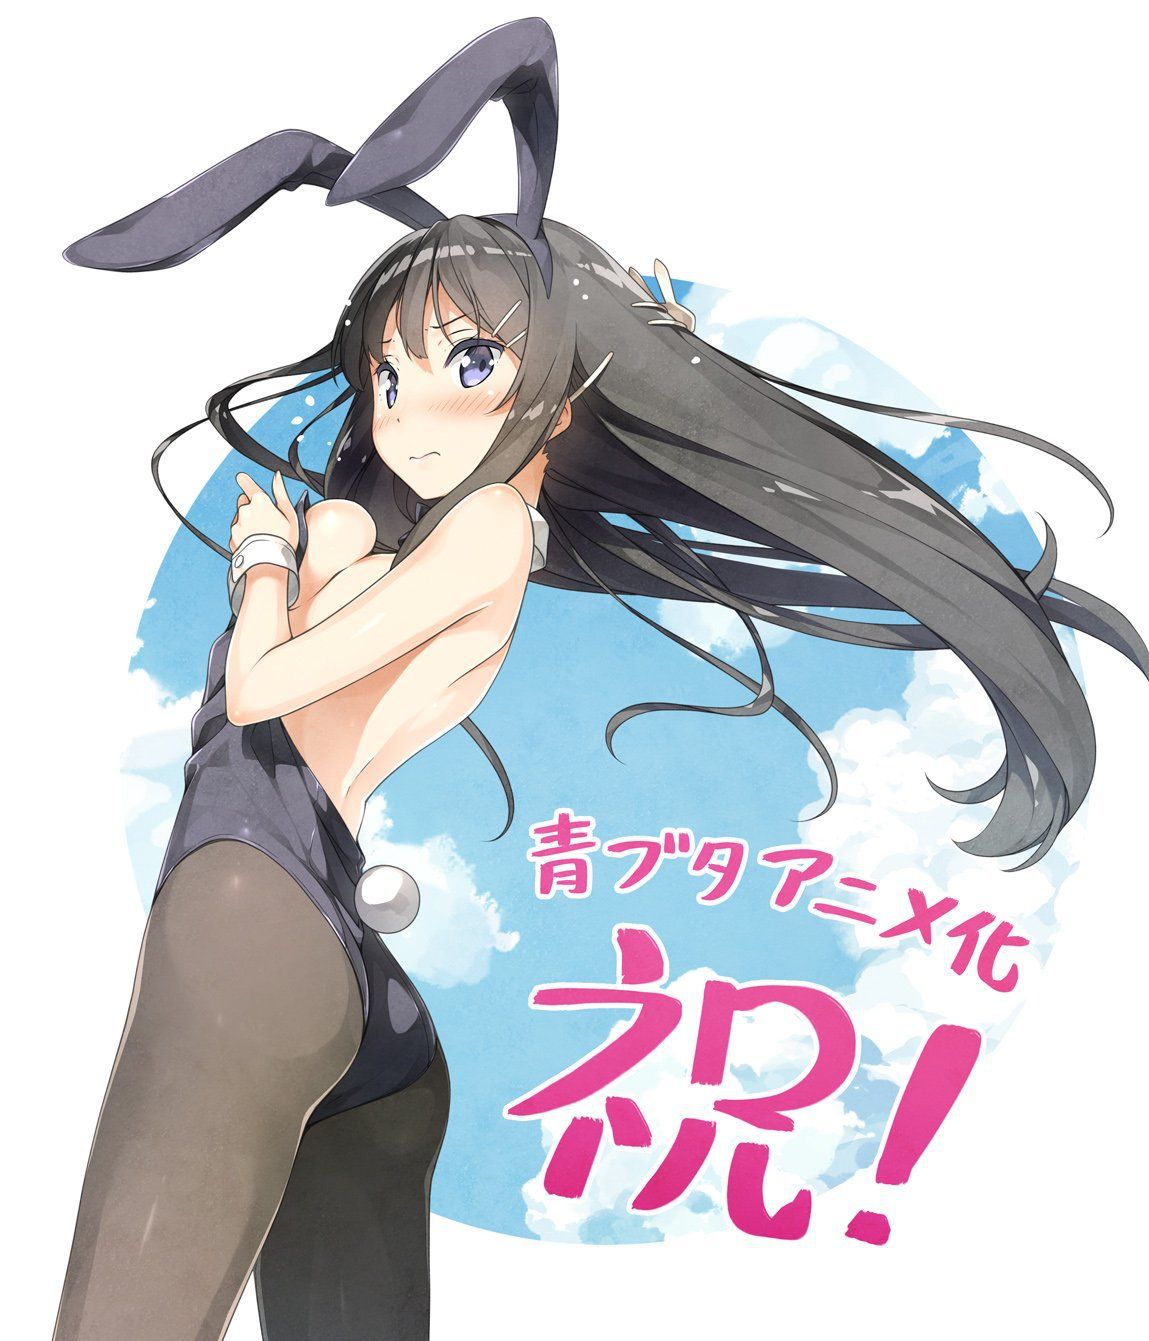 [Secondary/ZIP] Wild bunny girl mai sakurajima cute picture of the seniors "youth Pig does not dream of a senior Bunny girl" 40